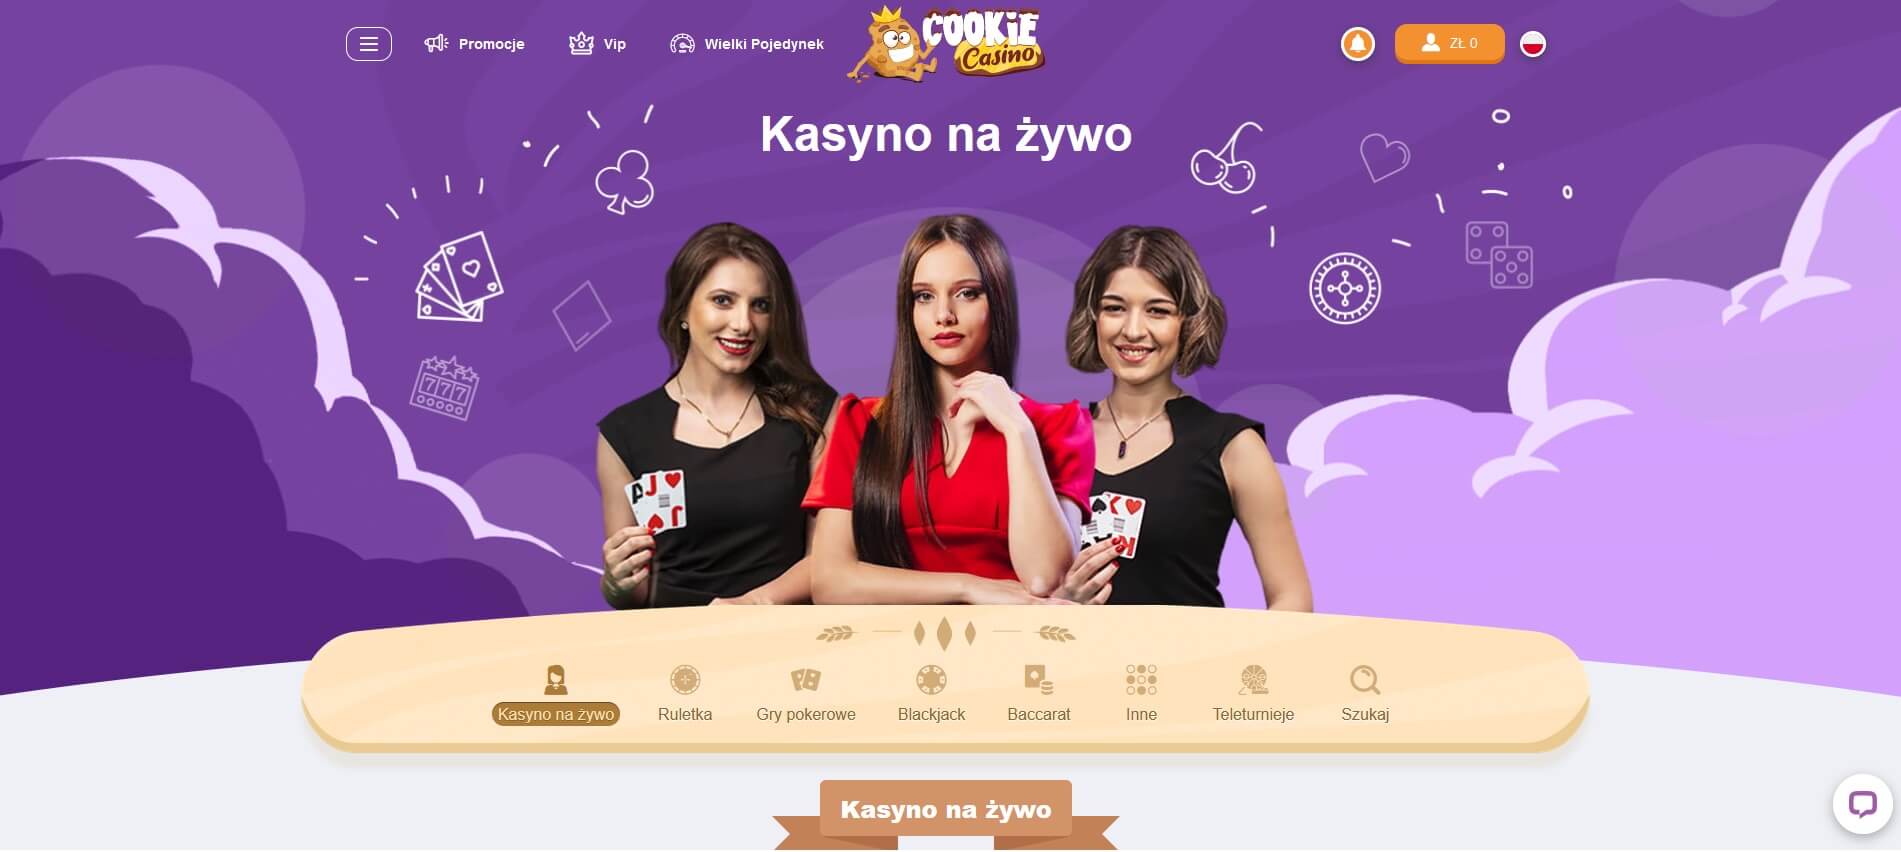 cookie casino live screenshot